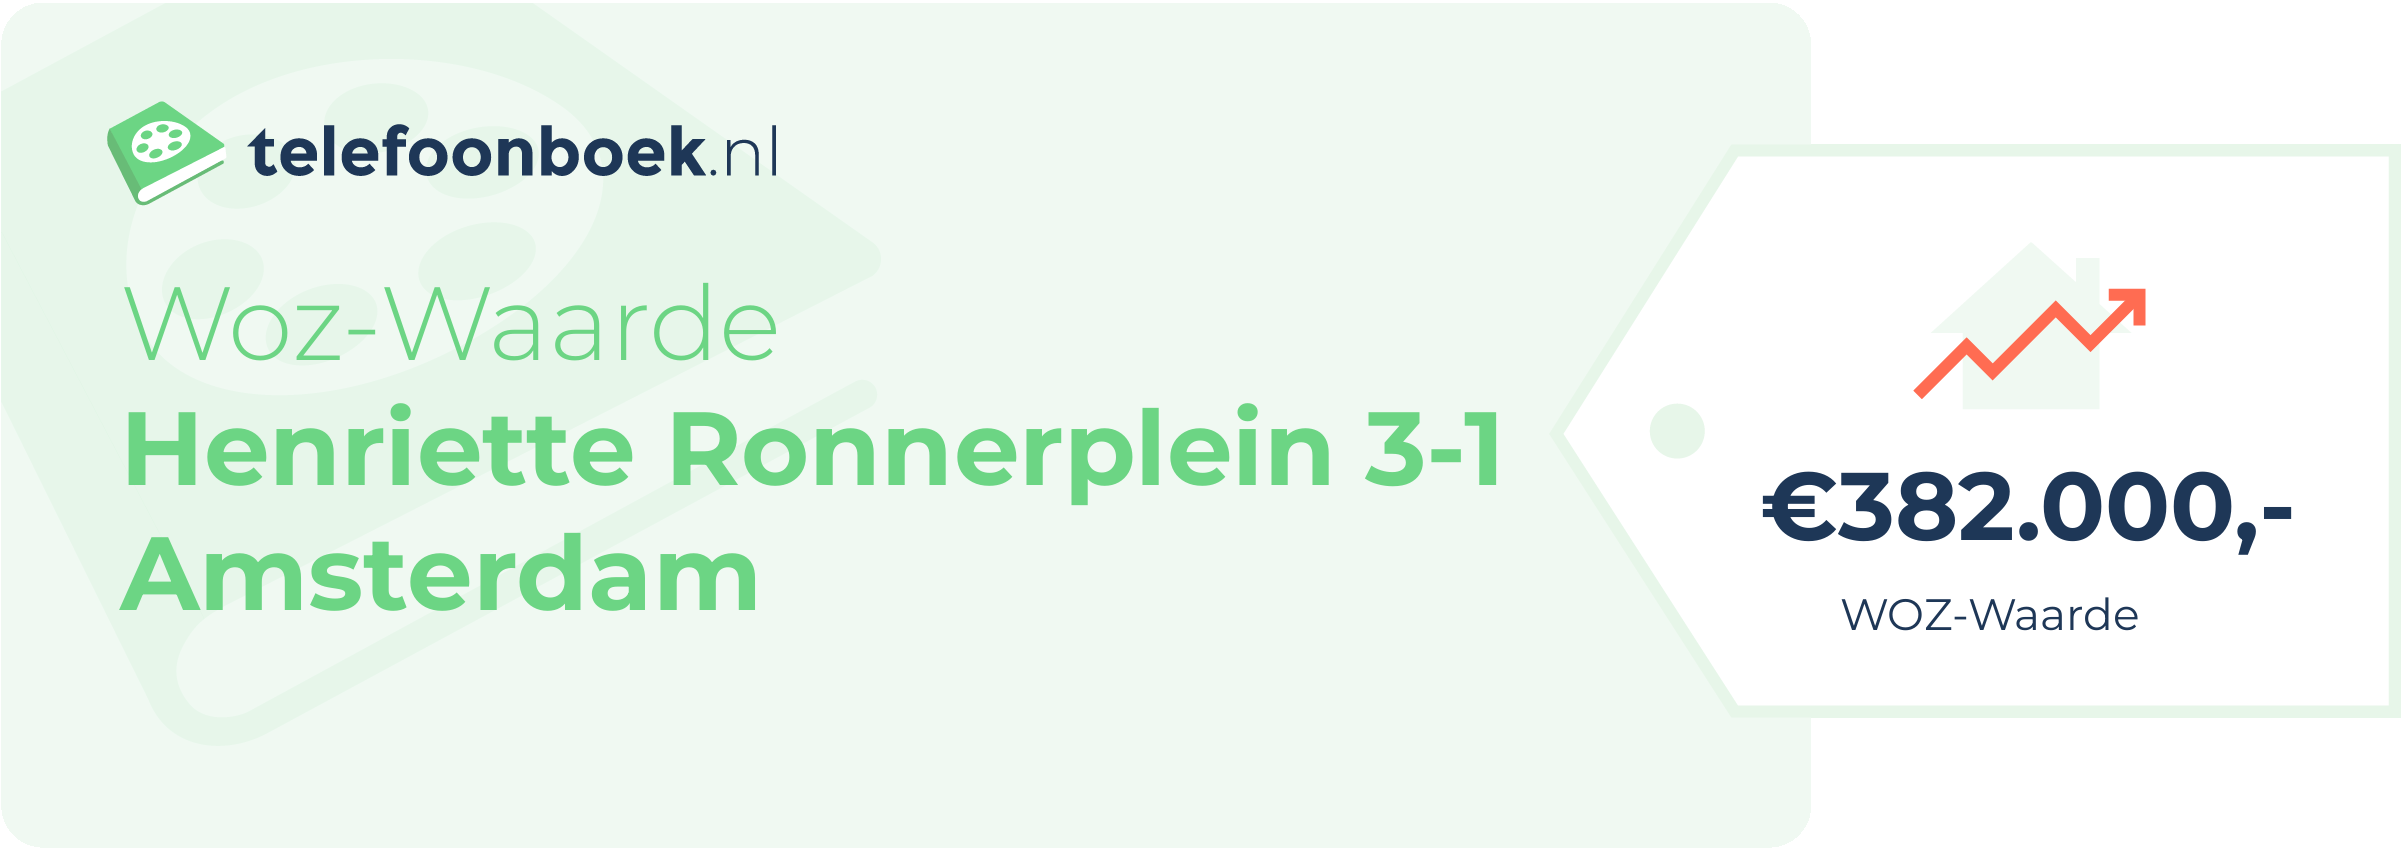 WOZ-waarde Henriette Ronnerplein 3-1 Amsterdam